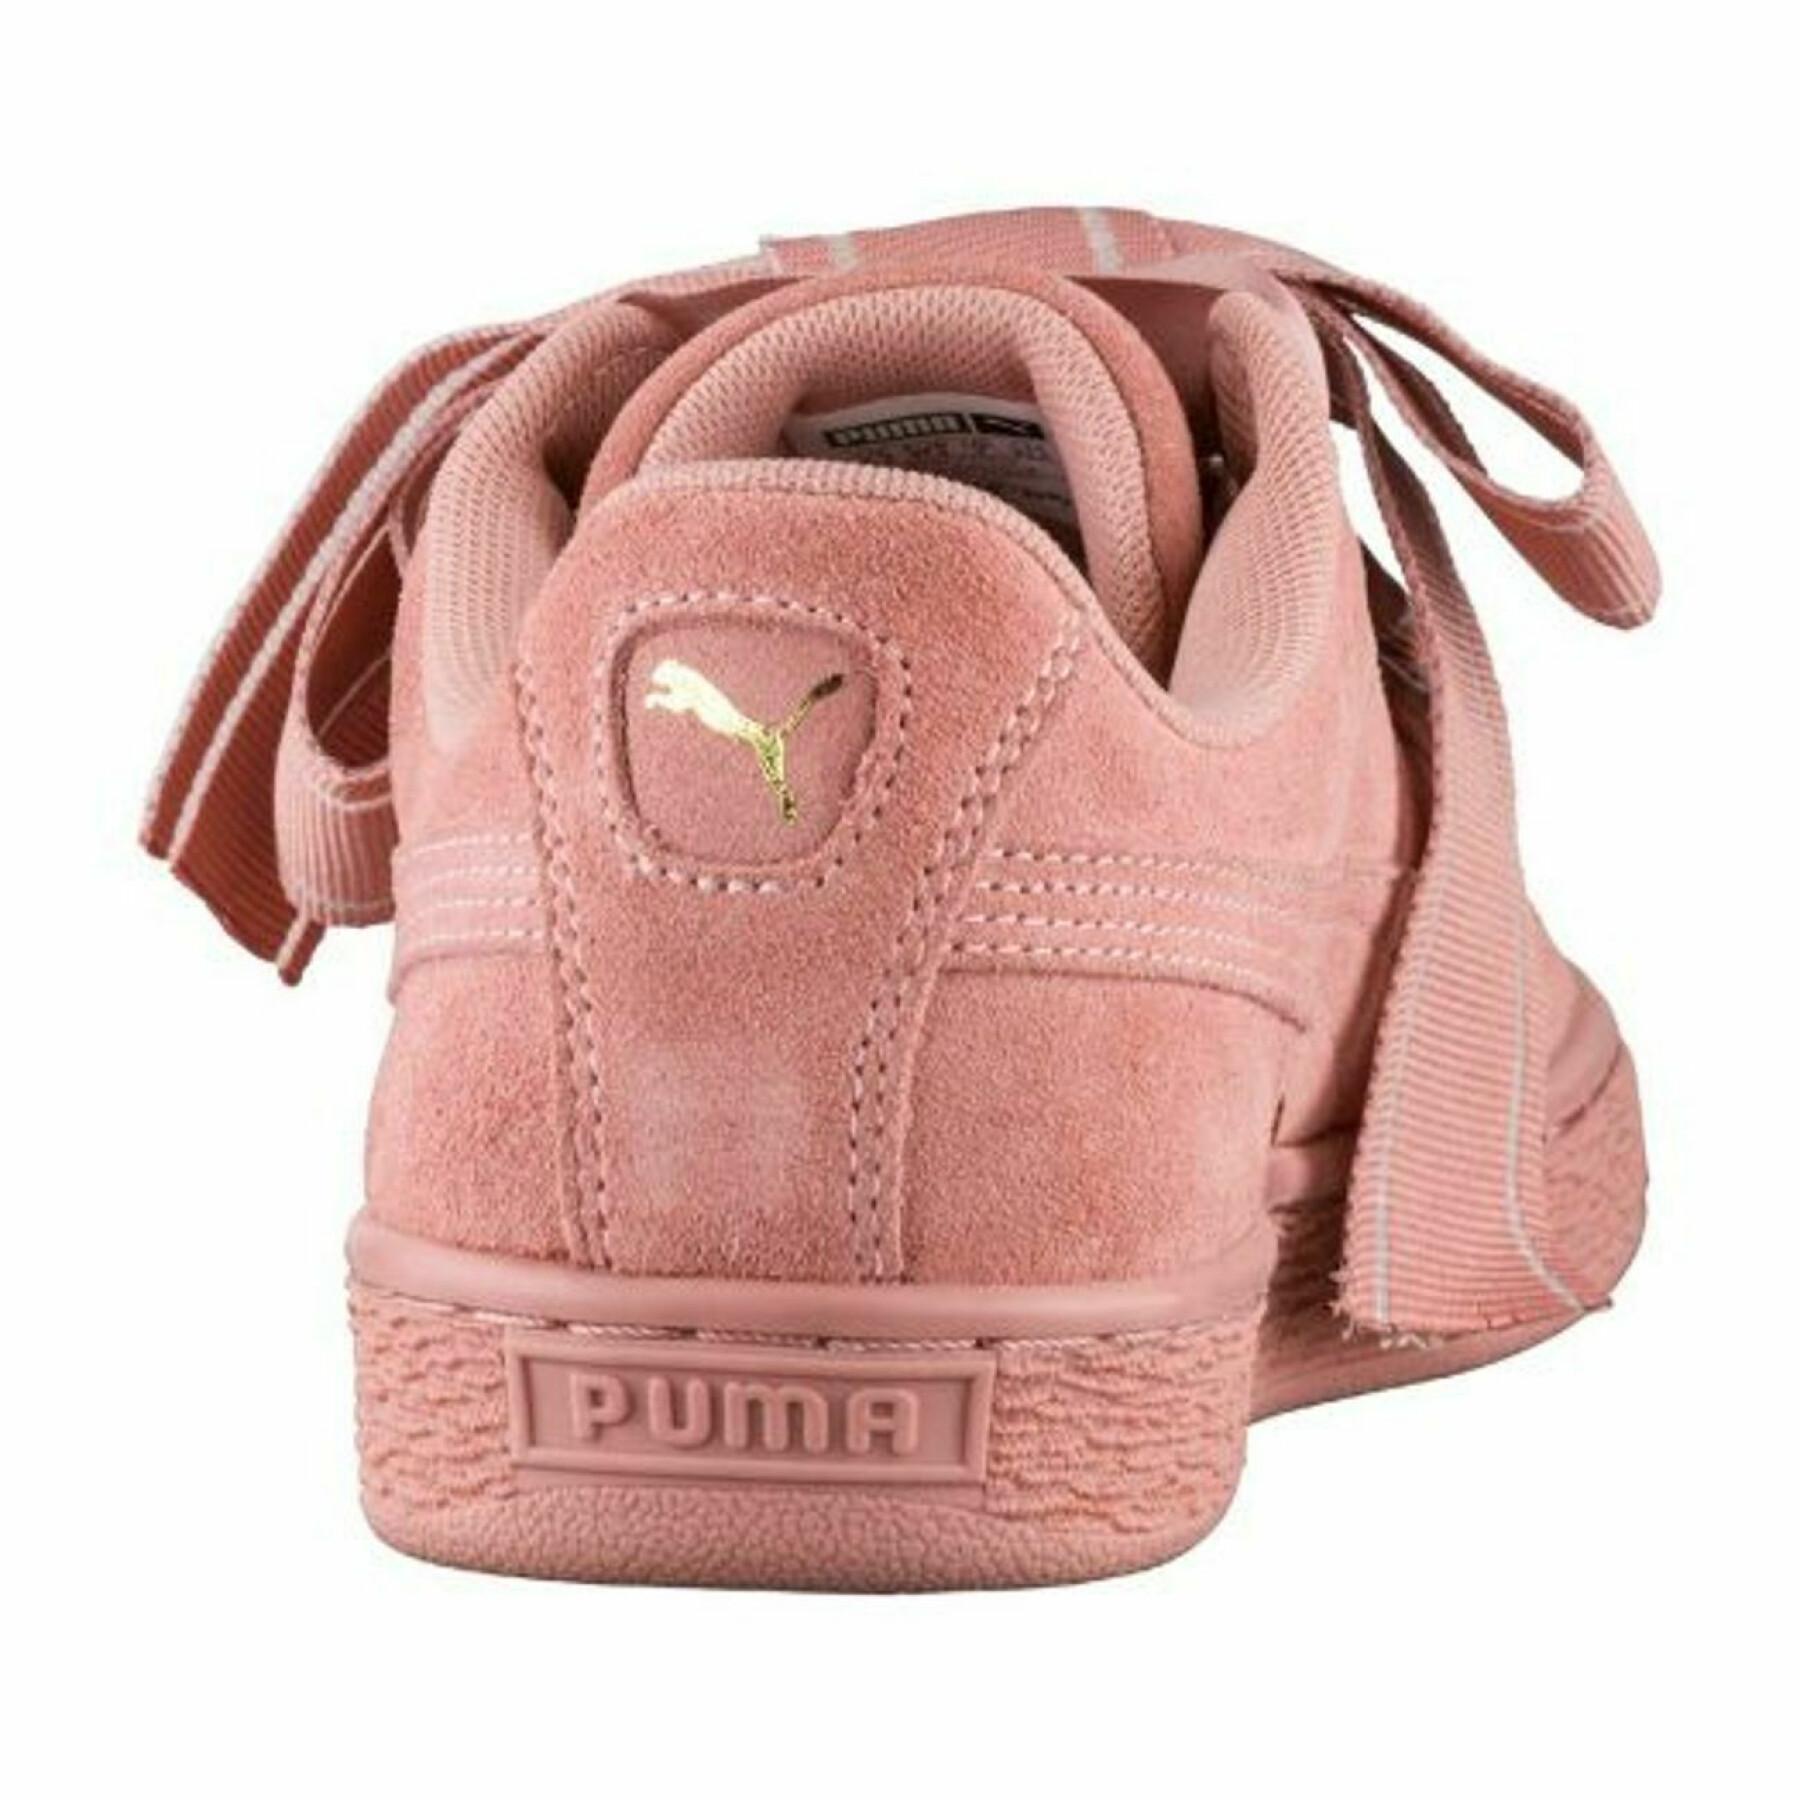 Women's satin sneakers Puma Suede Heart